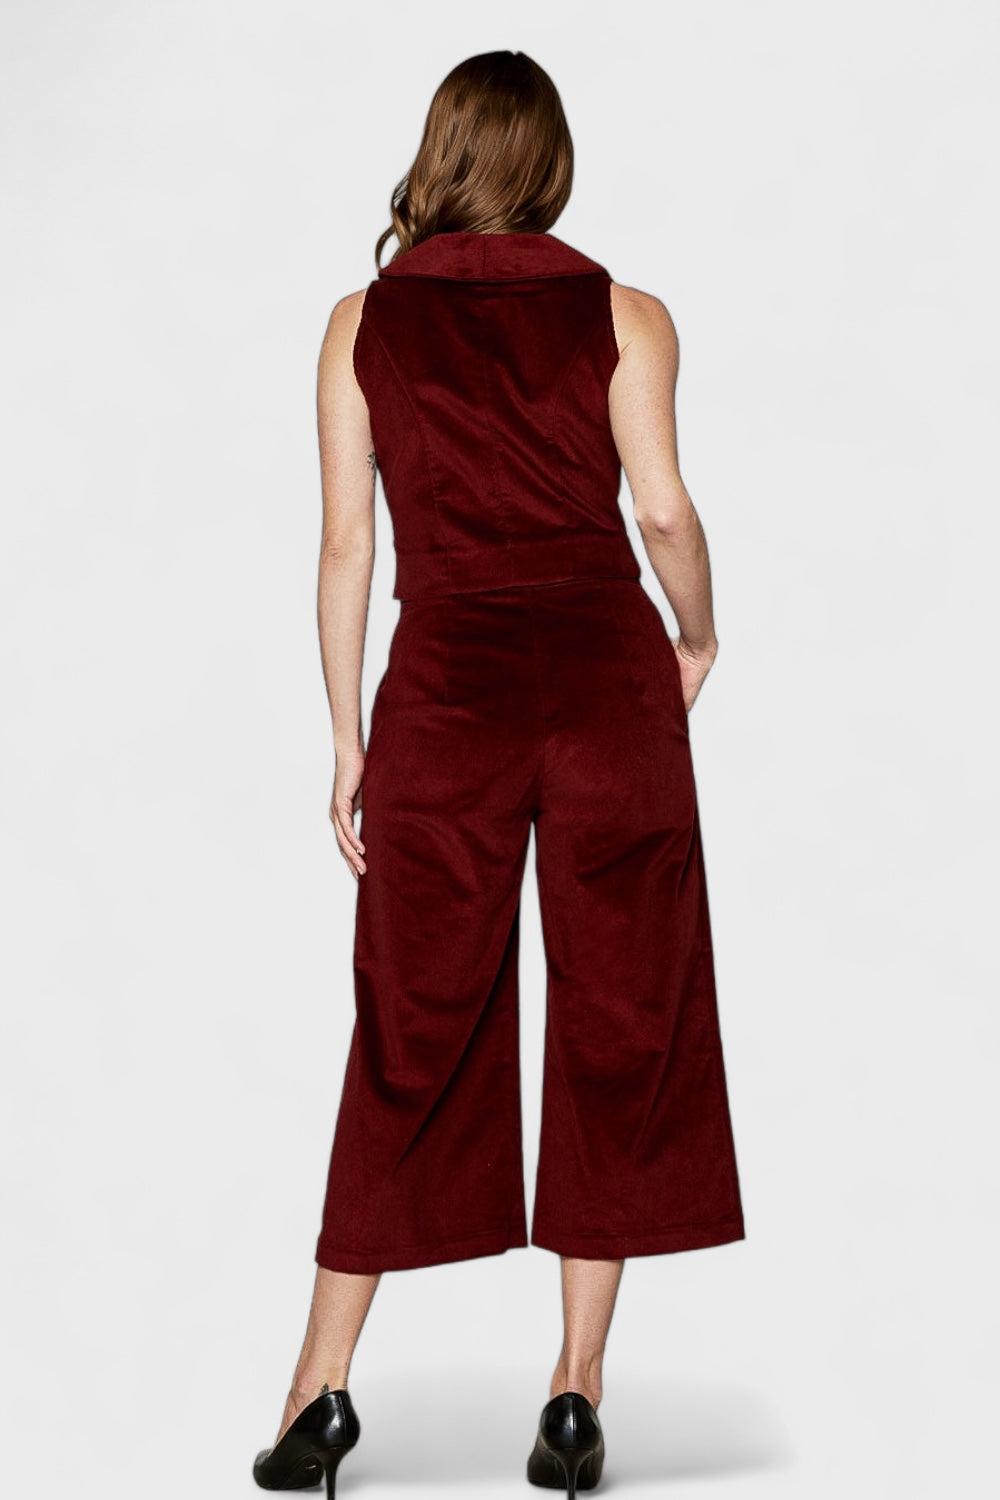 Sistine Burgundy Corduroy Vest & Cropped Pants Two-Piece Suit Set by Marise.Eco.Couture Italian Women's Fashion